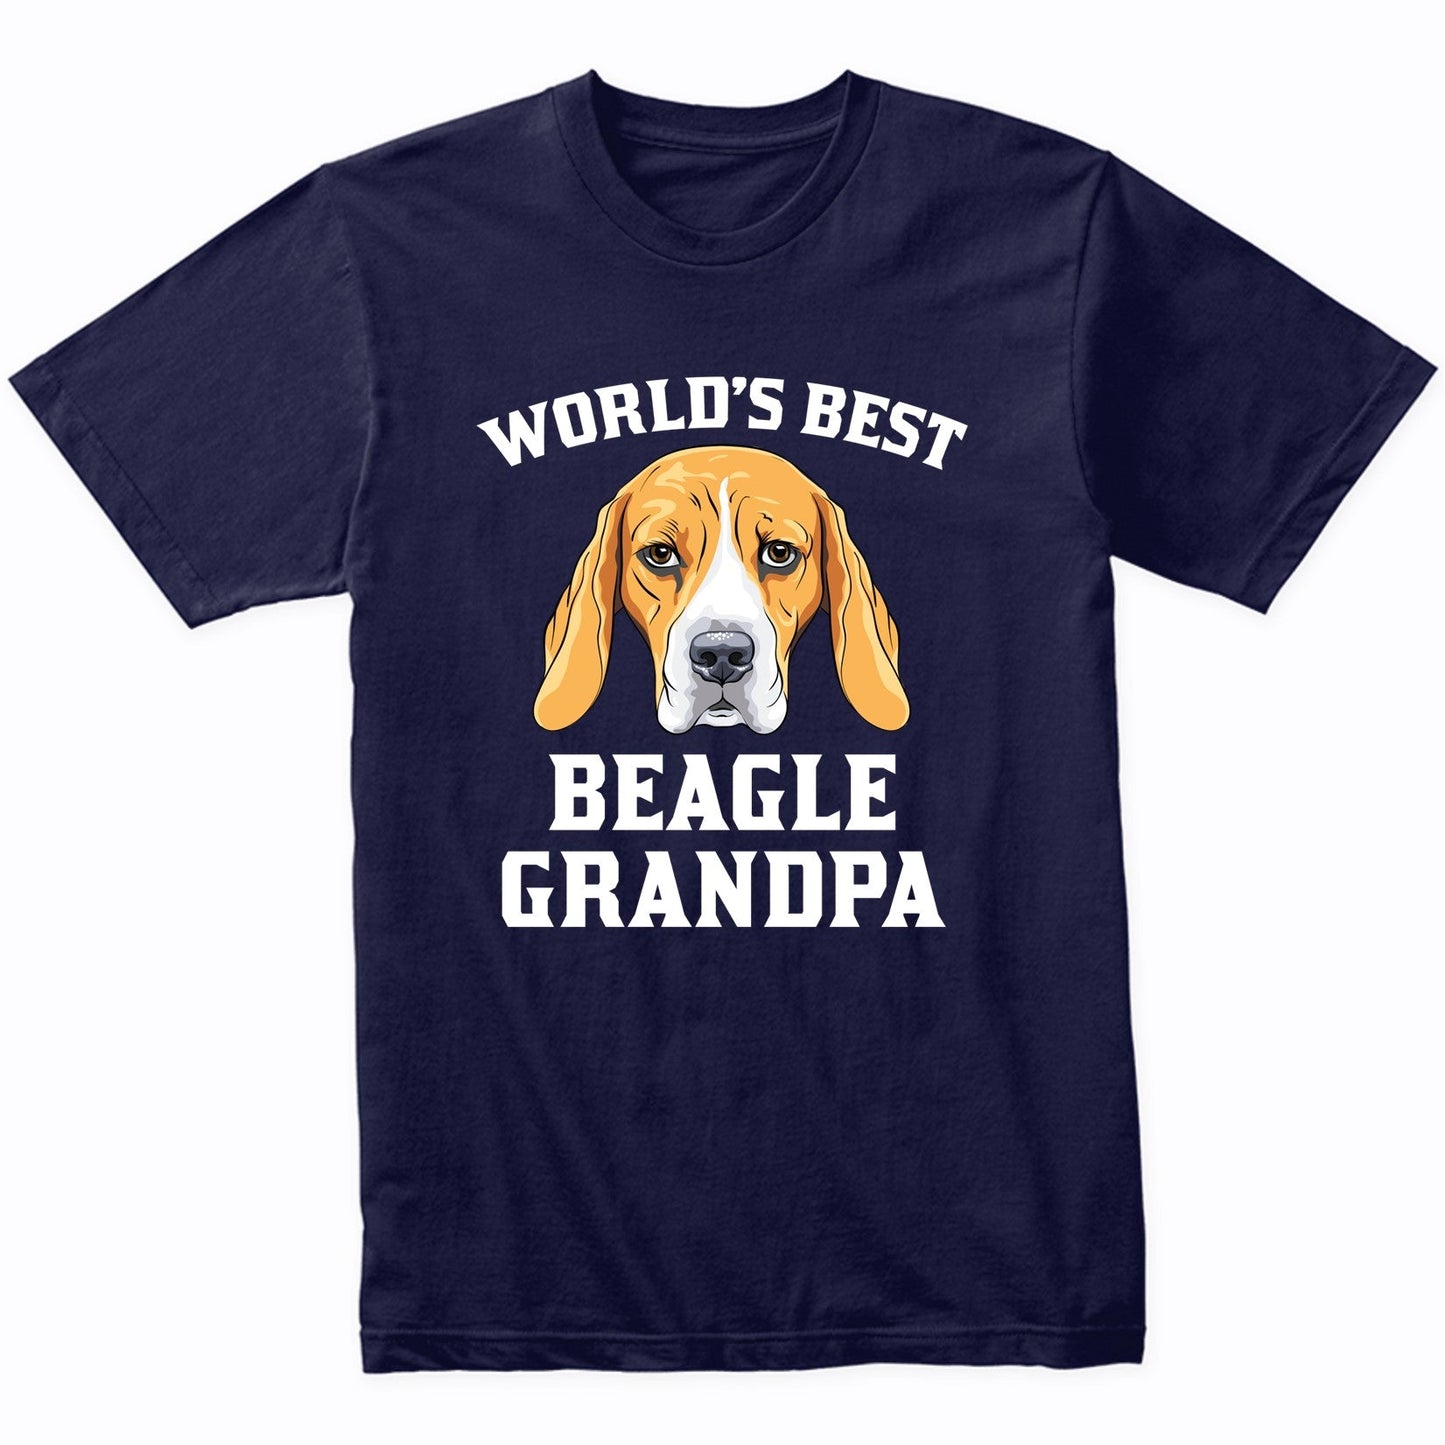 World's Best Beagle Grandpa Dog Graphic T-Shirt